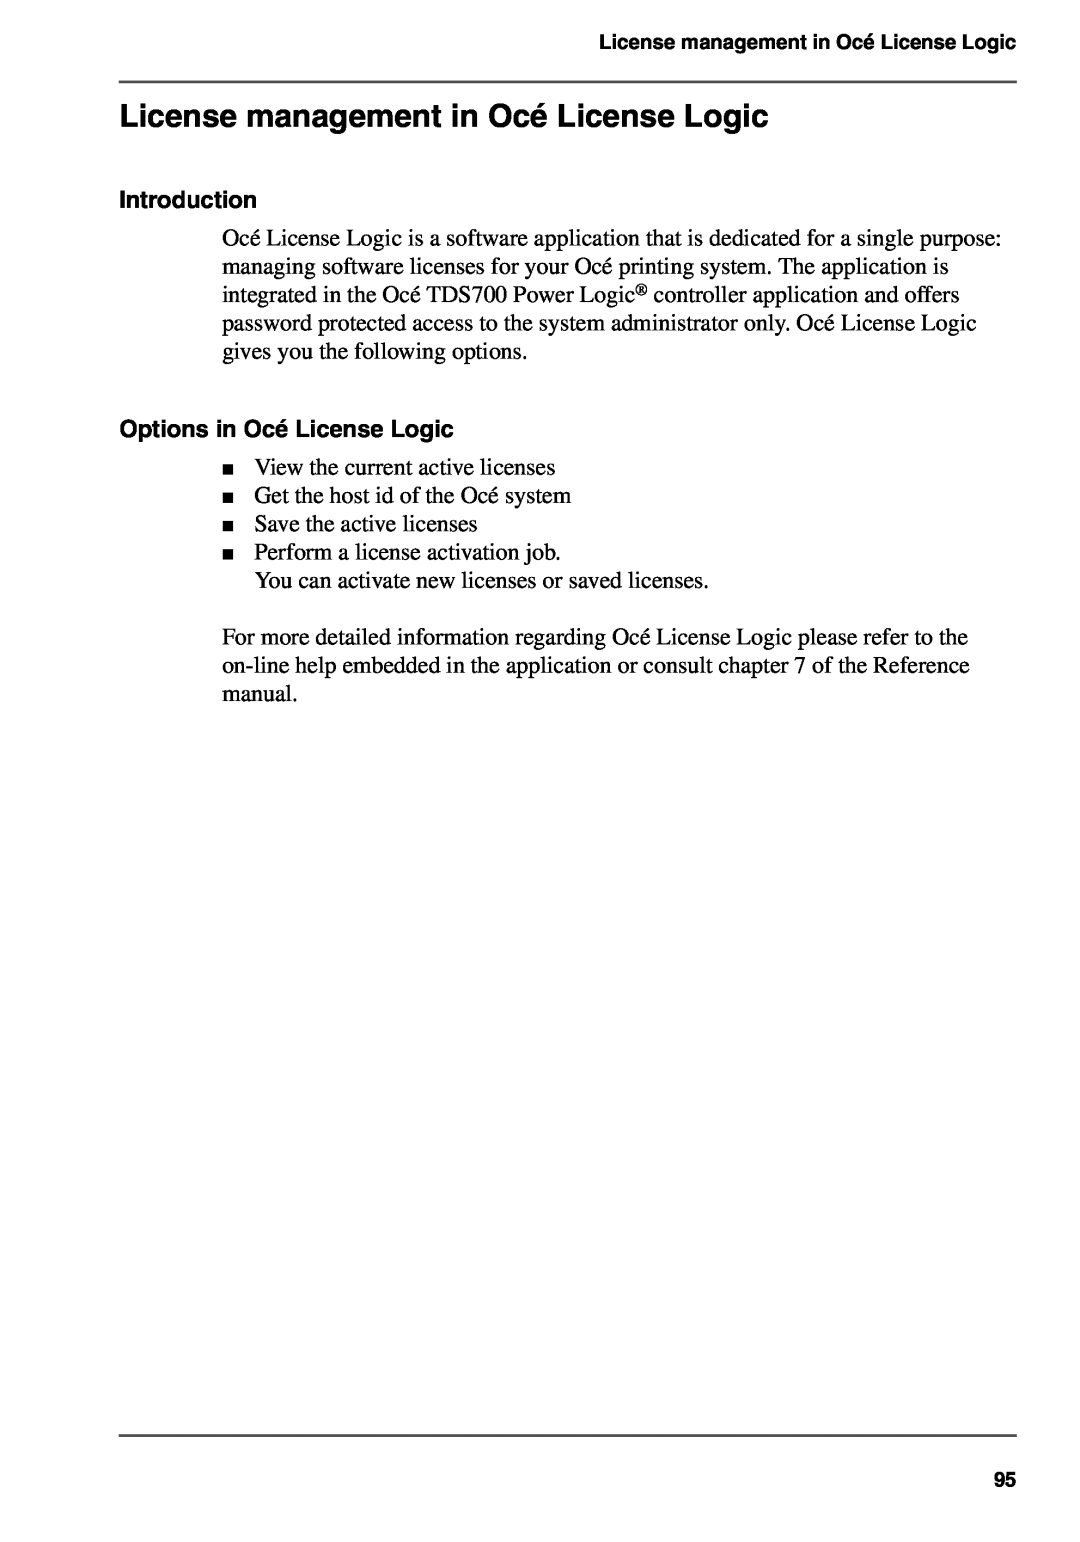 Oce North America TDS700 user manual License management in Océ License Logic, Options in Océ License Logic, Introduction 